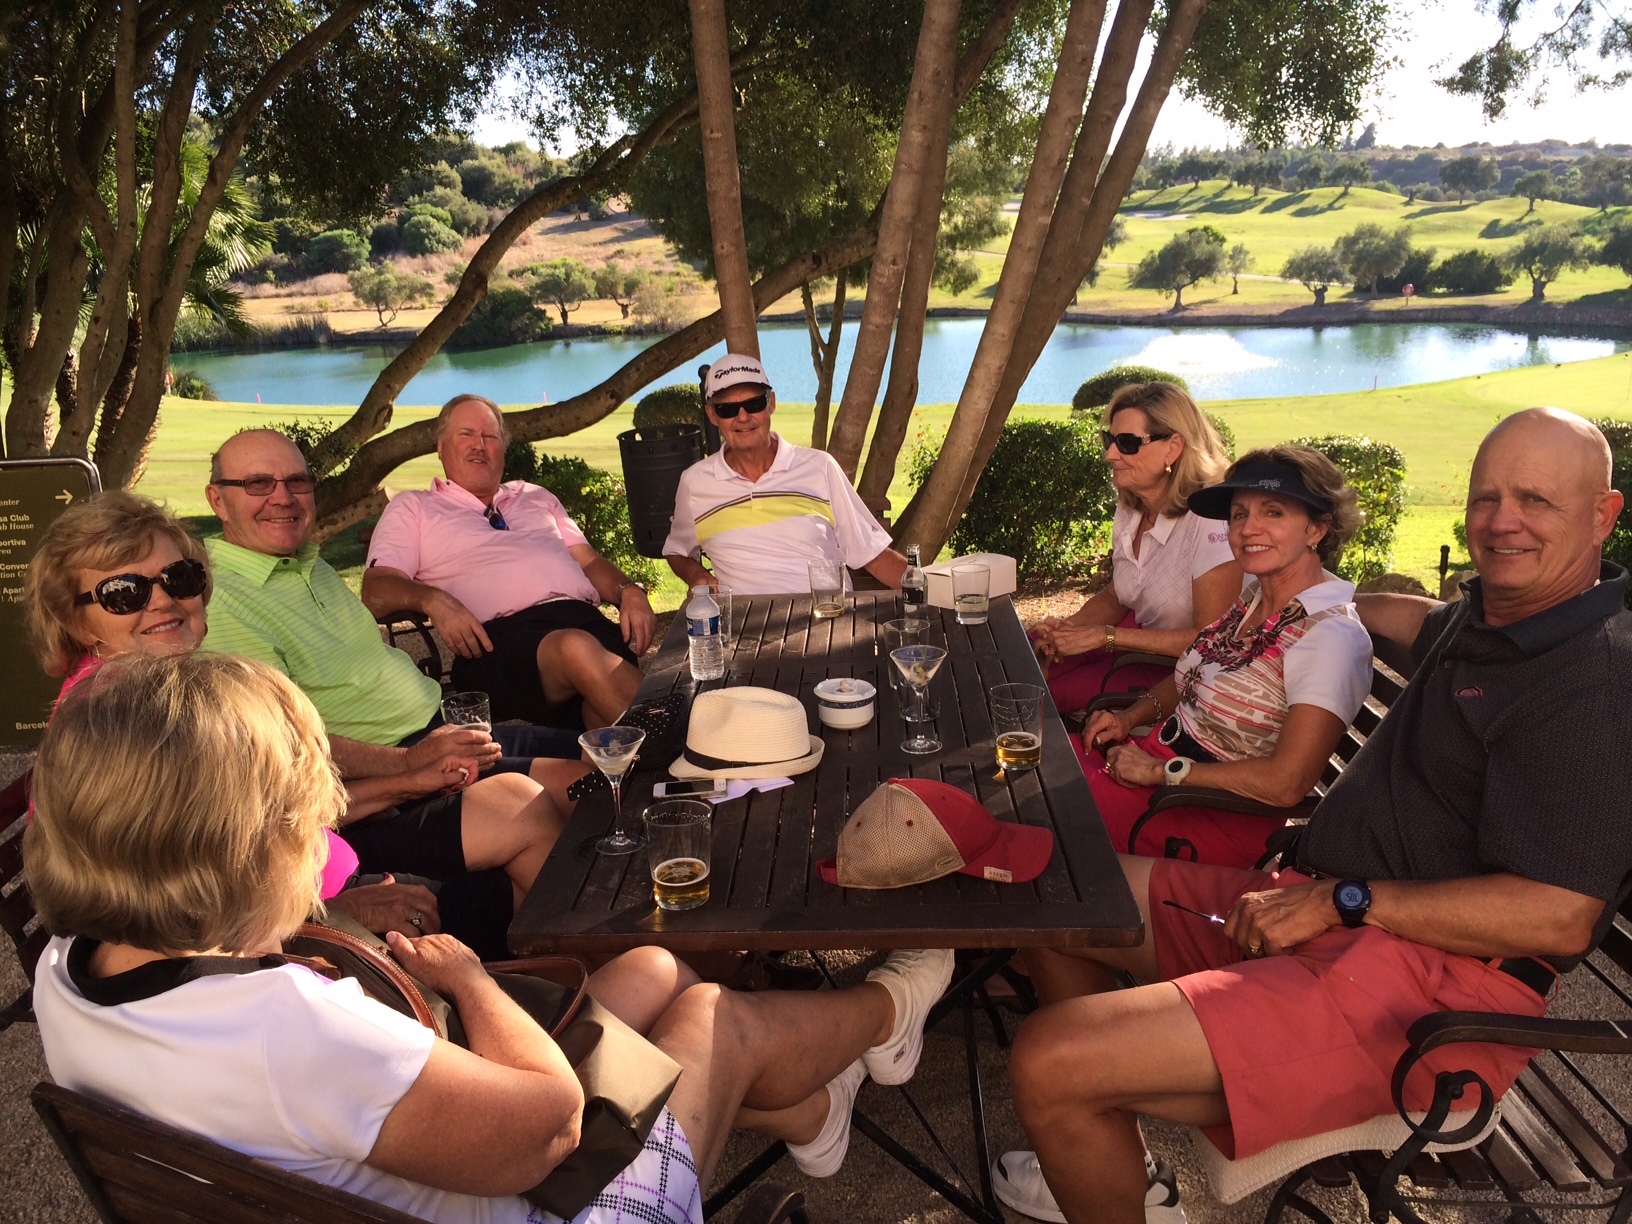 Visit Cadiz, Spain on our 2017 Mediterranean Golf Cruise and play Montecastillo!